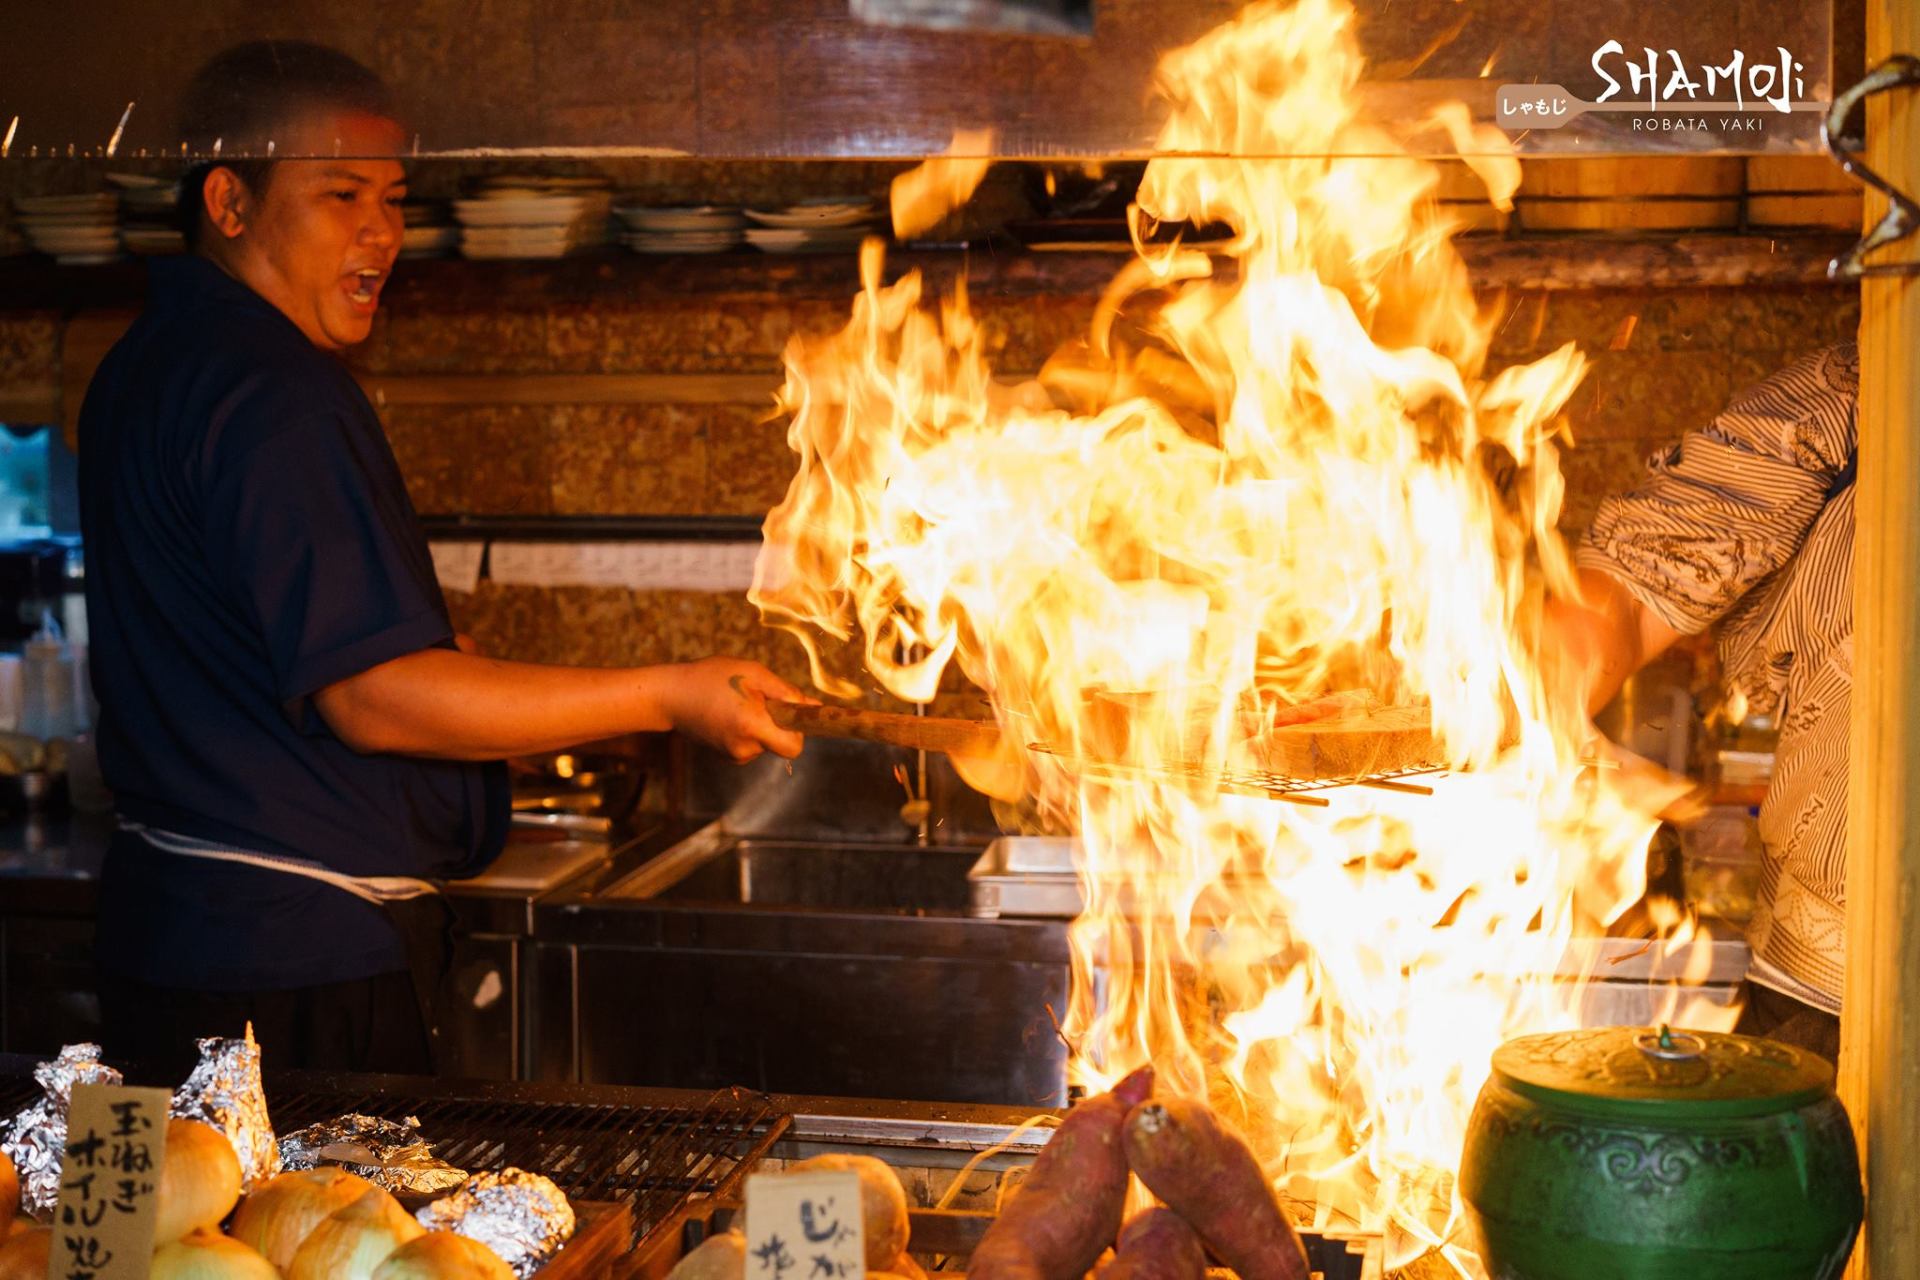 The art of cooking | Photo: Shamoji Robata Yaki